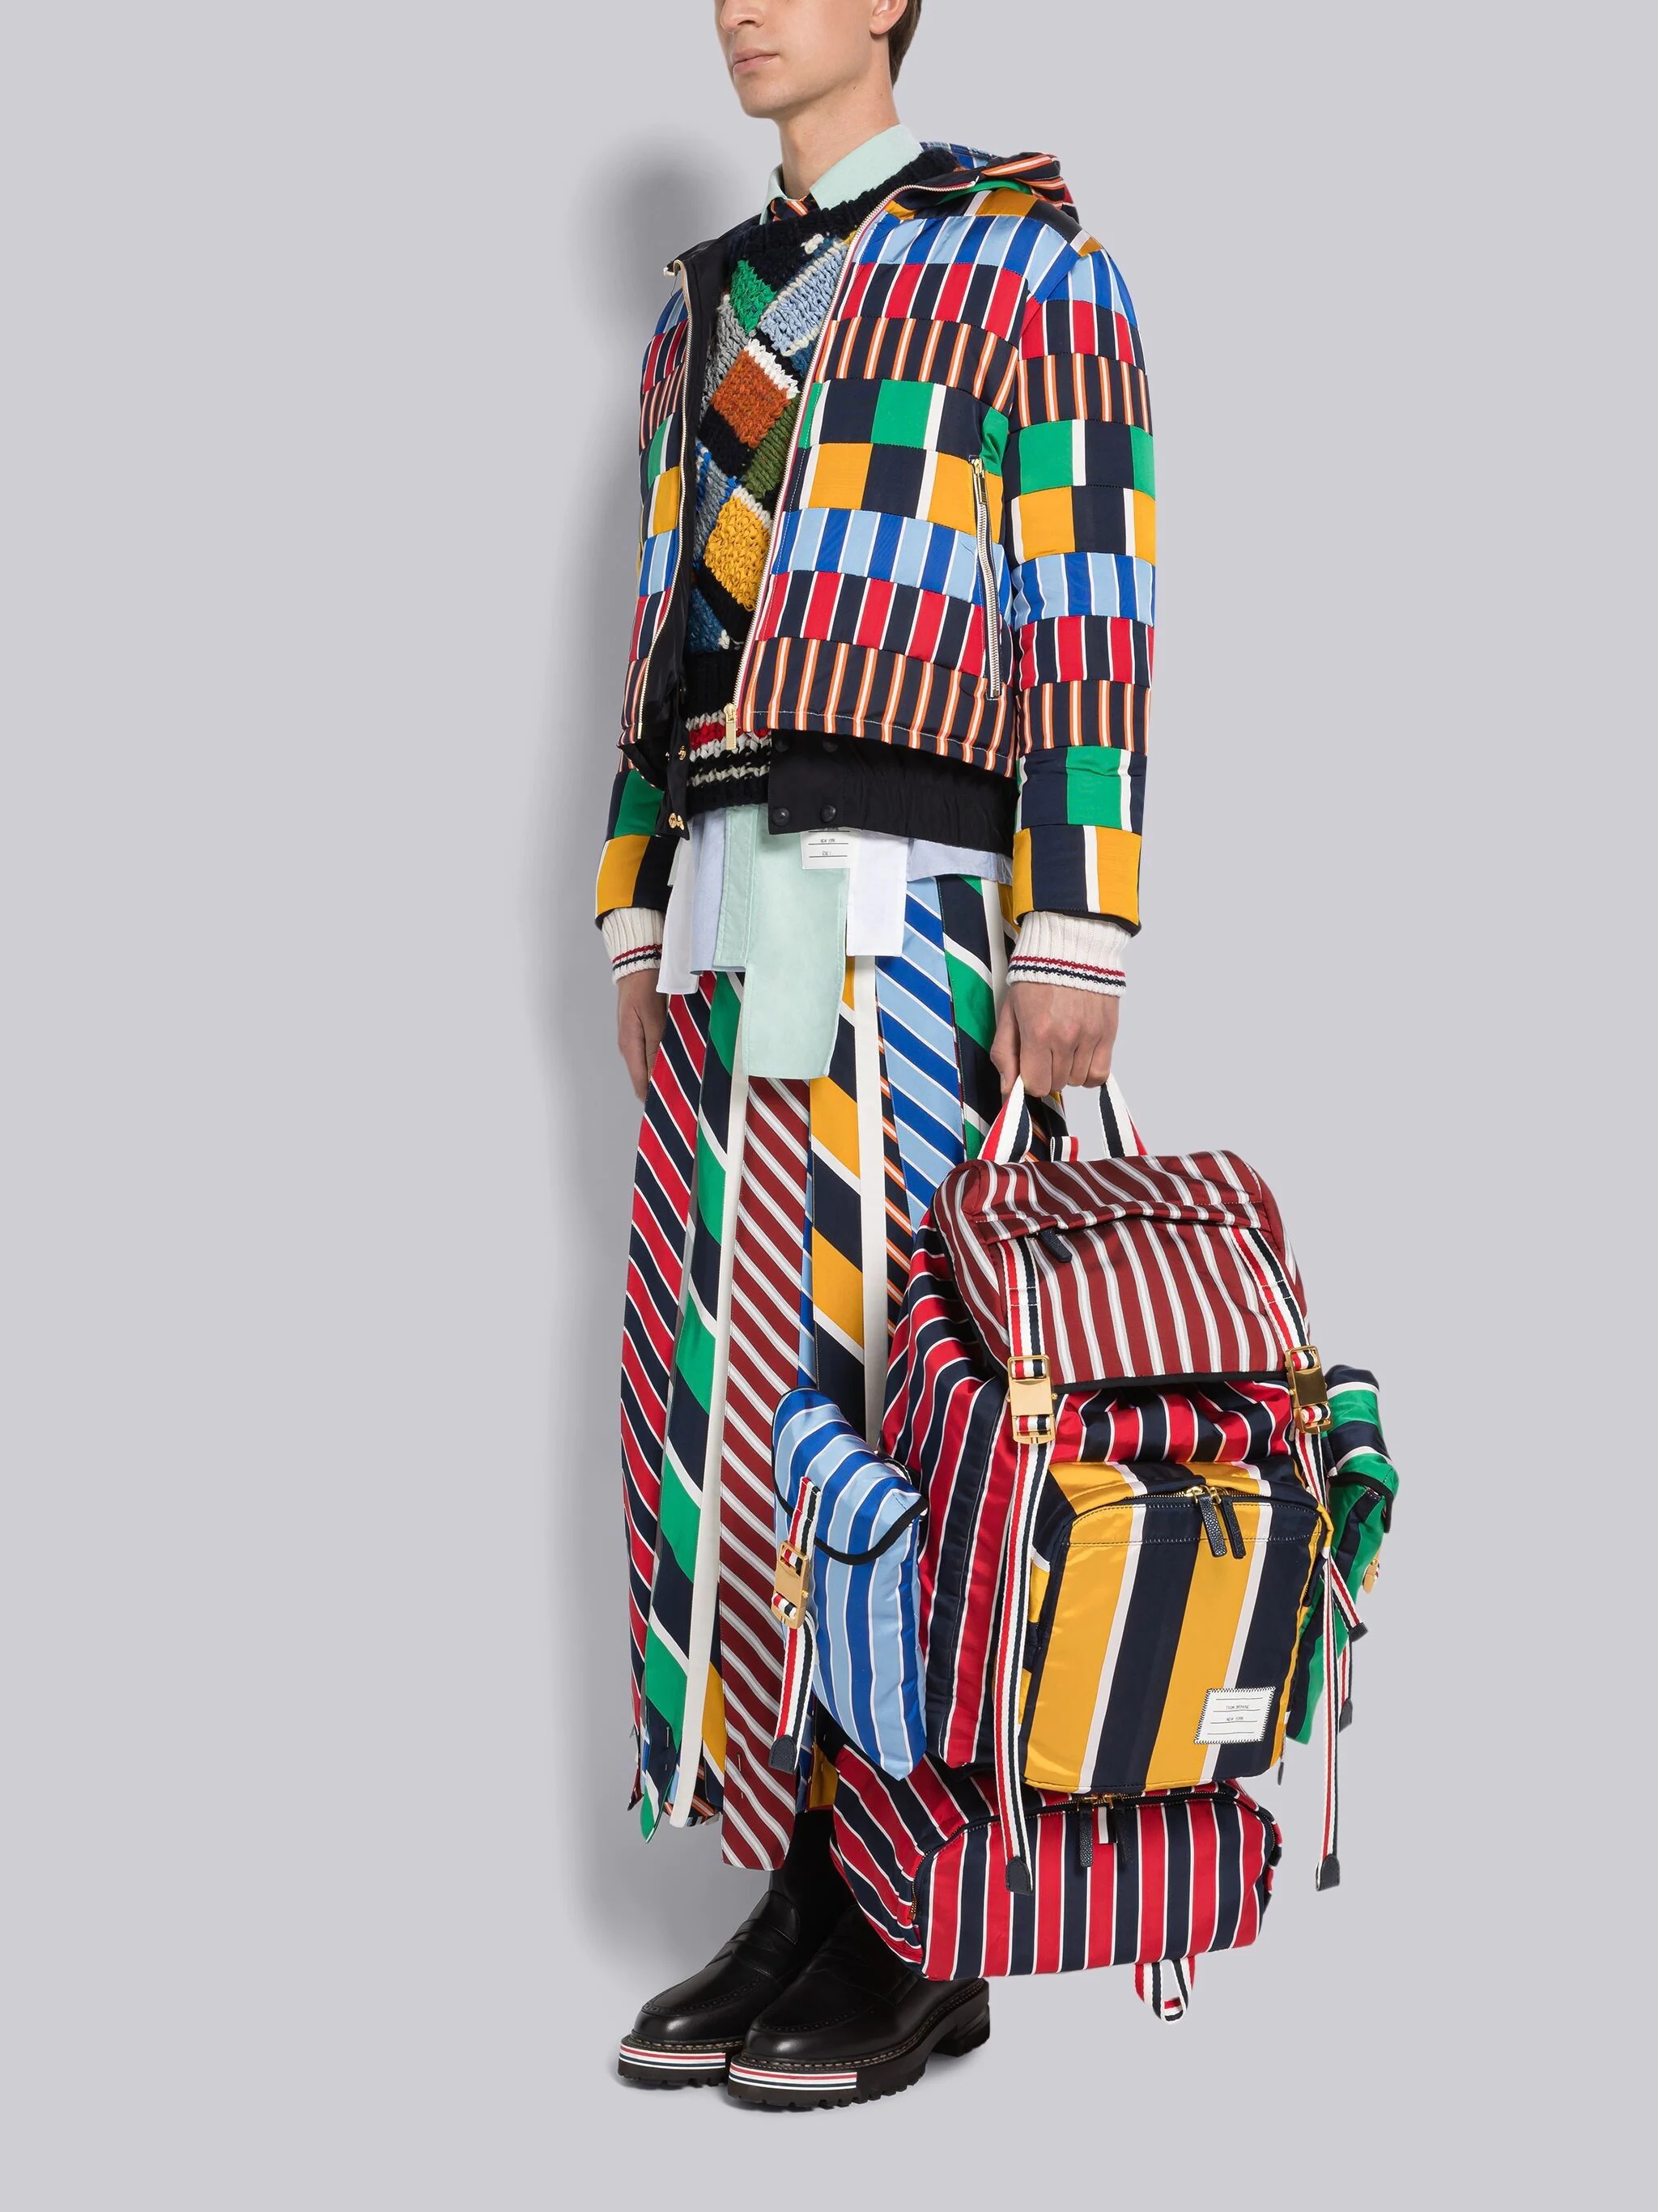 Fun-Mix Stripe Tie Jacquard Mountaineering Backpack - 6